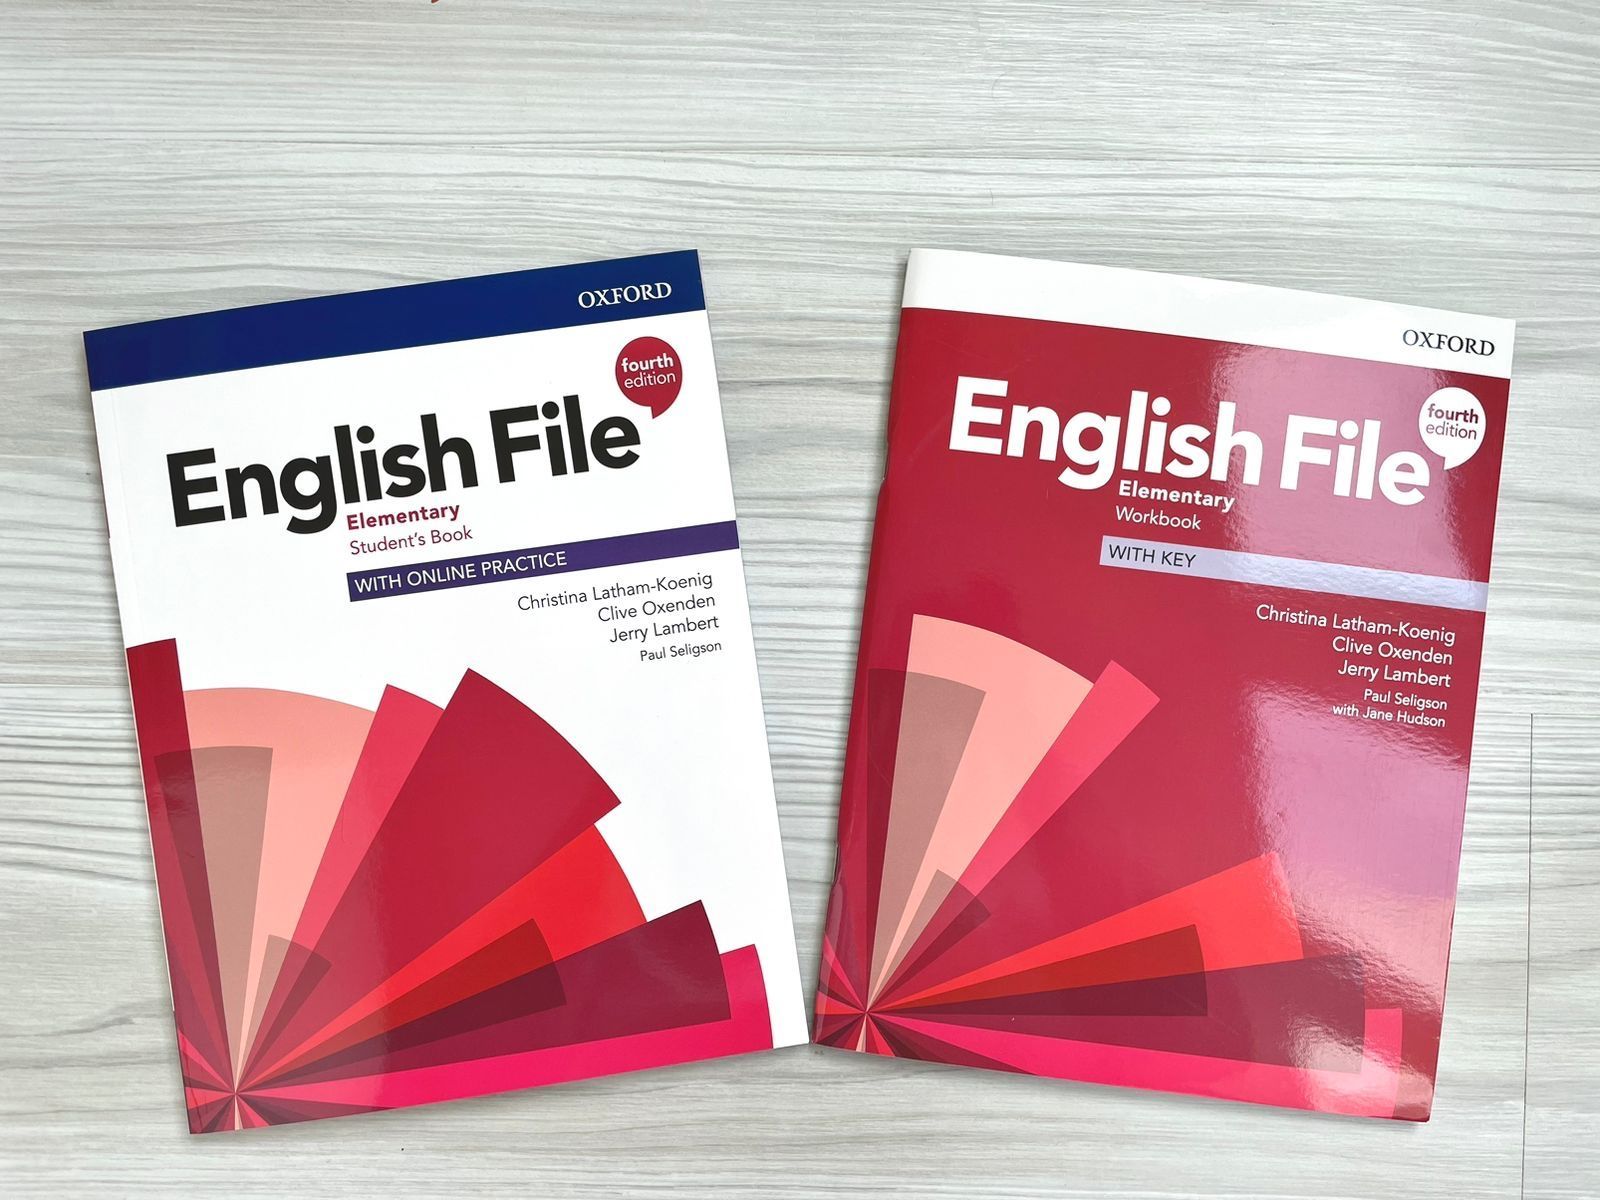 English file: Elementary. English file 4 Edition Elementary. English file Elementary Workbook fourth Edition. English file Elementary 4th Edition.